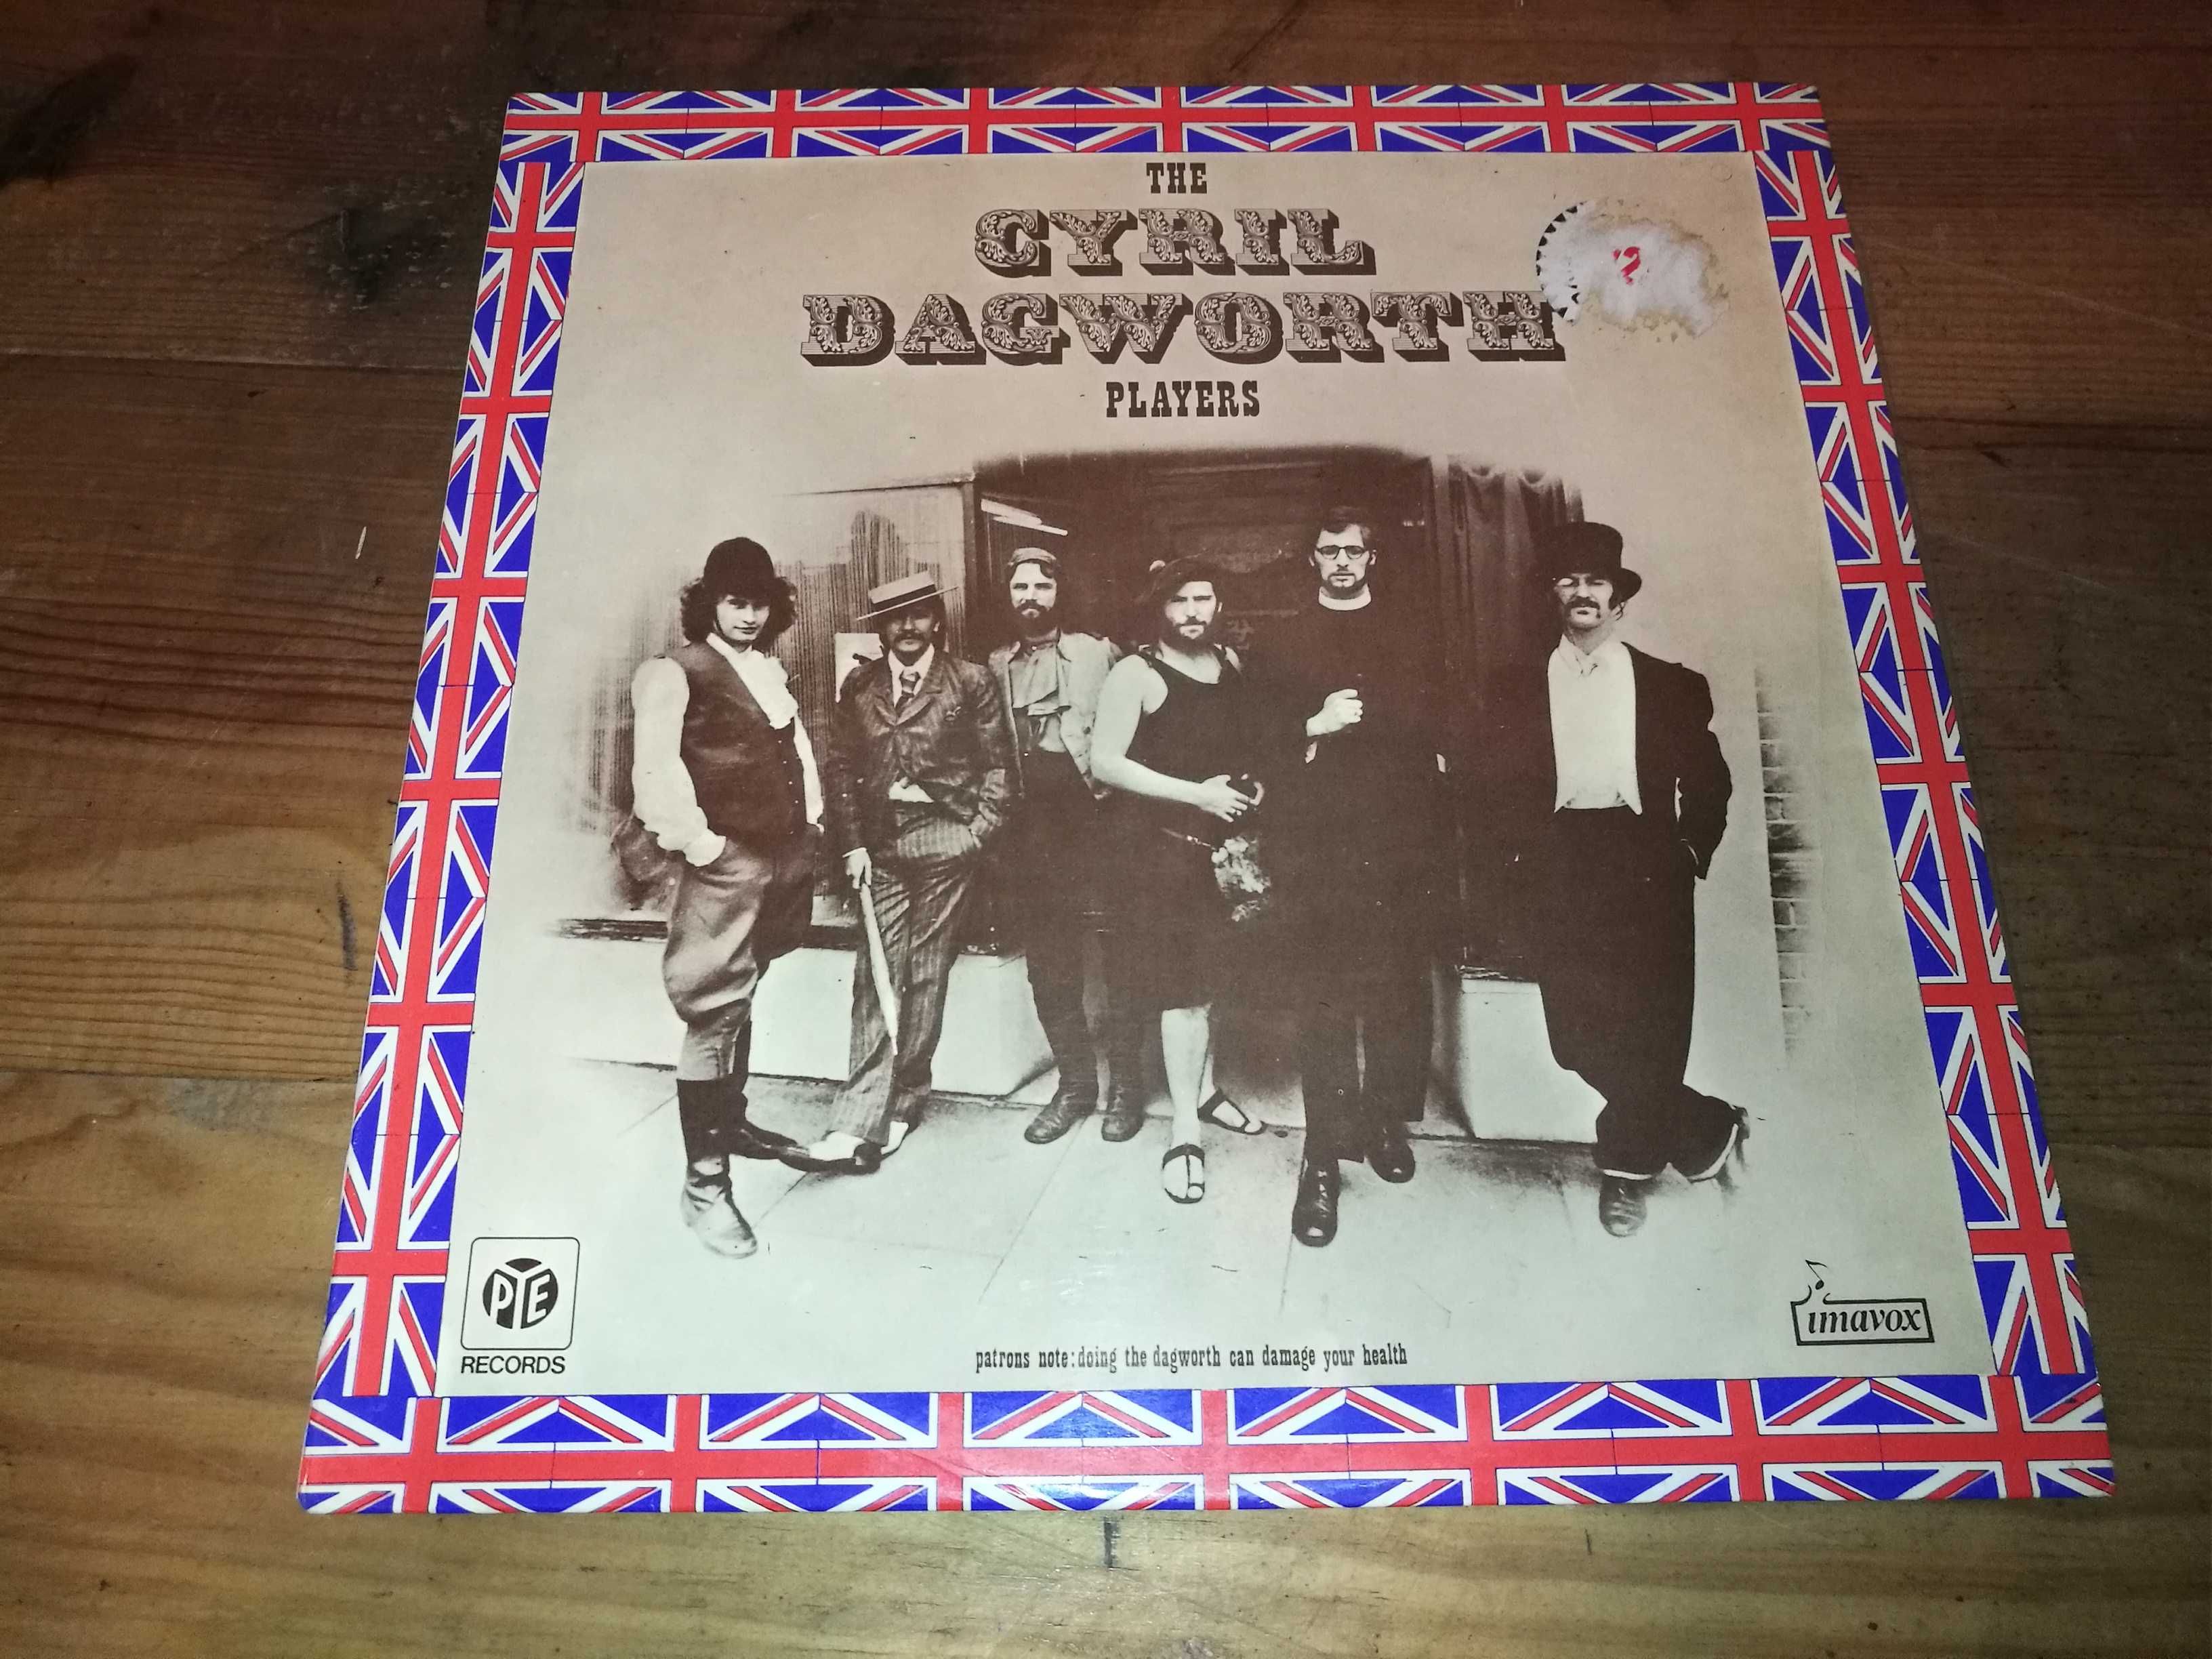 THE CYRIL DAGWORTH PLAYERS (Prog-Rock)-The Cyril Dagworth Players LP